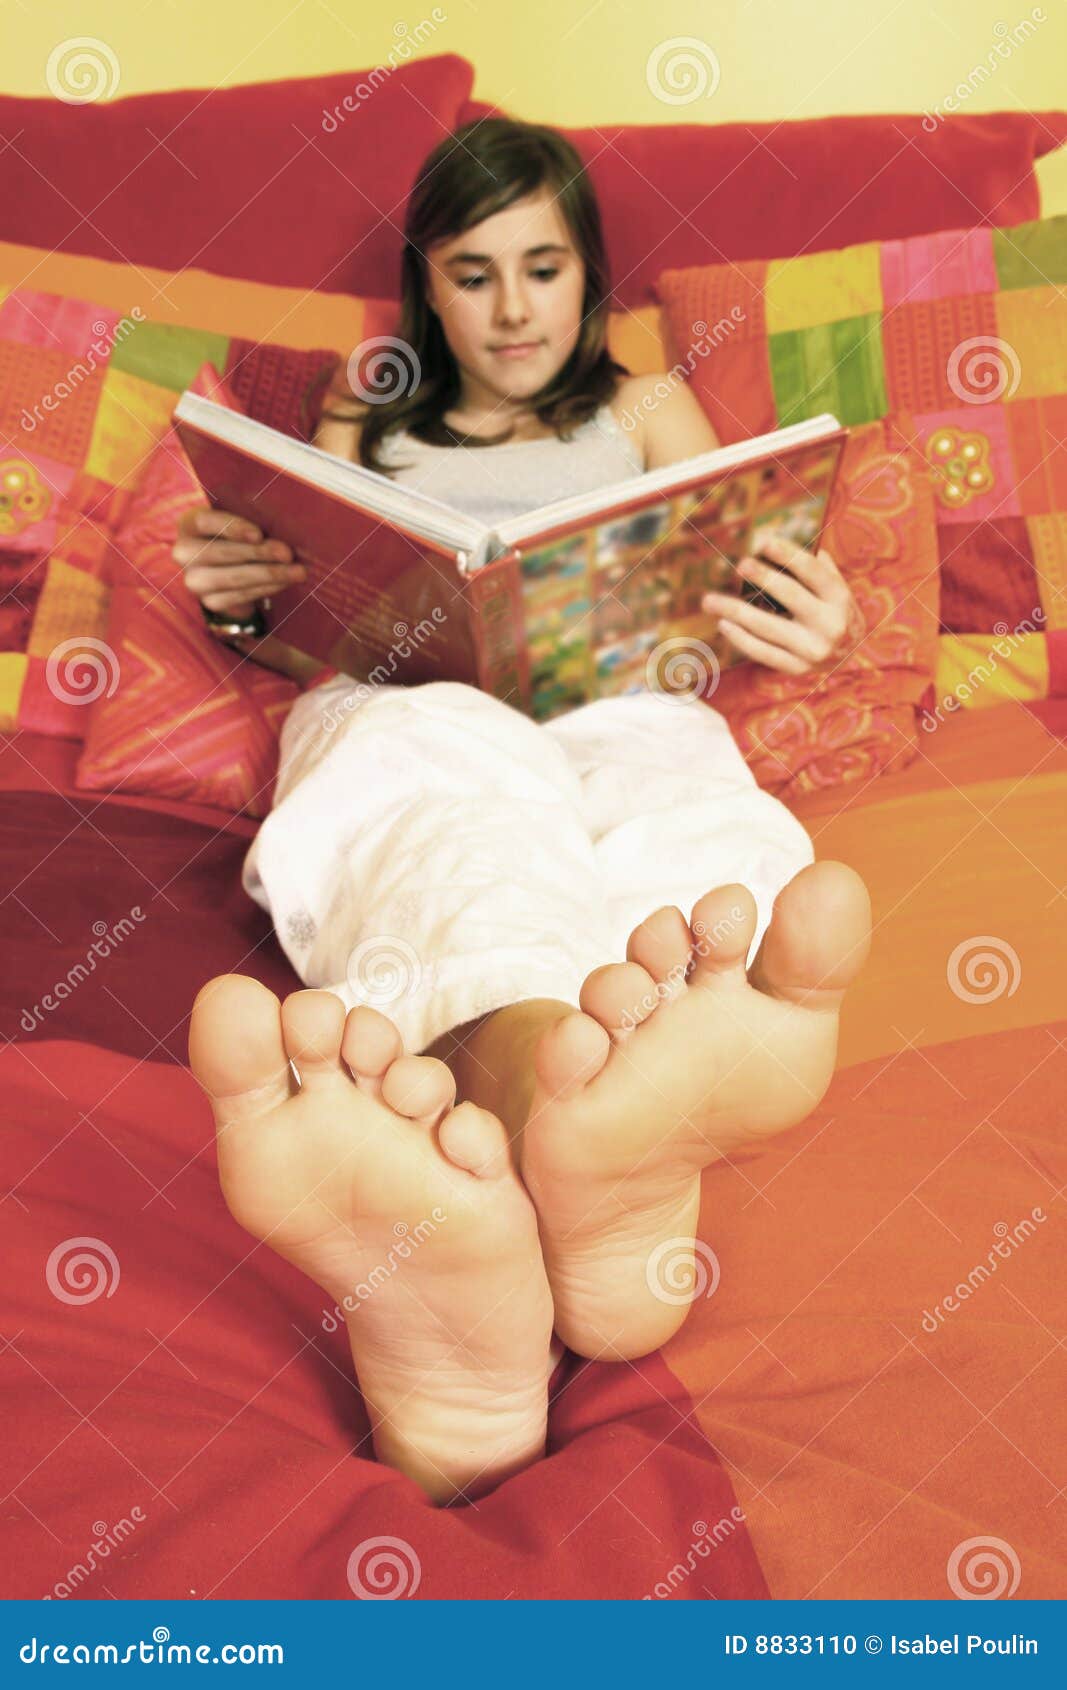 Feet ignore. Стопа книг. Книга с ногами. Девушка с книгой на кровати. Женские ноги с книгой.